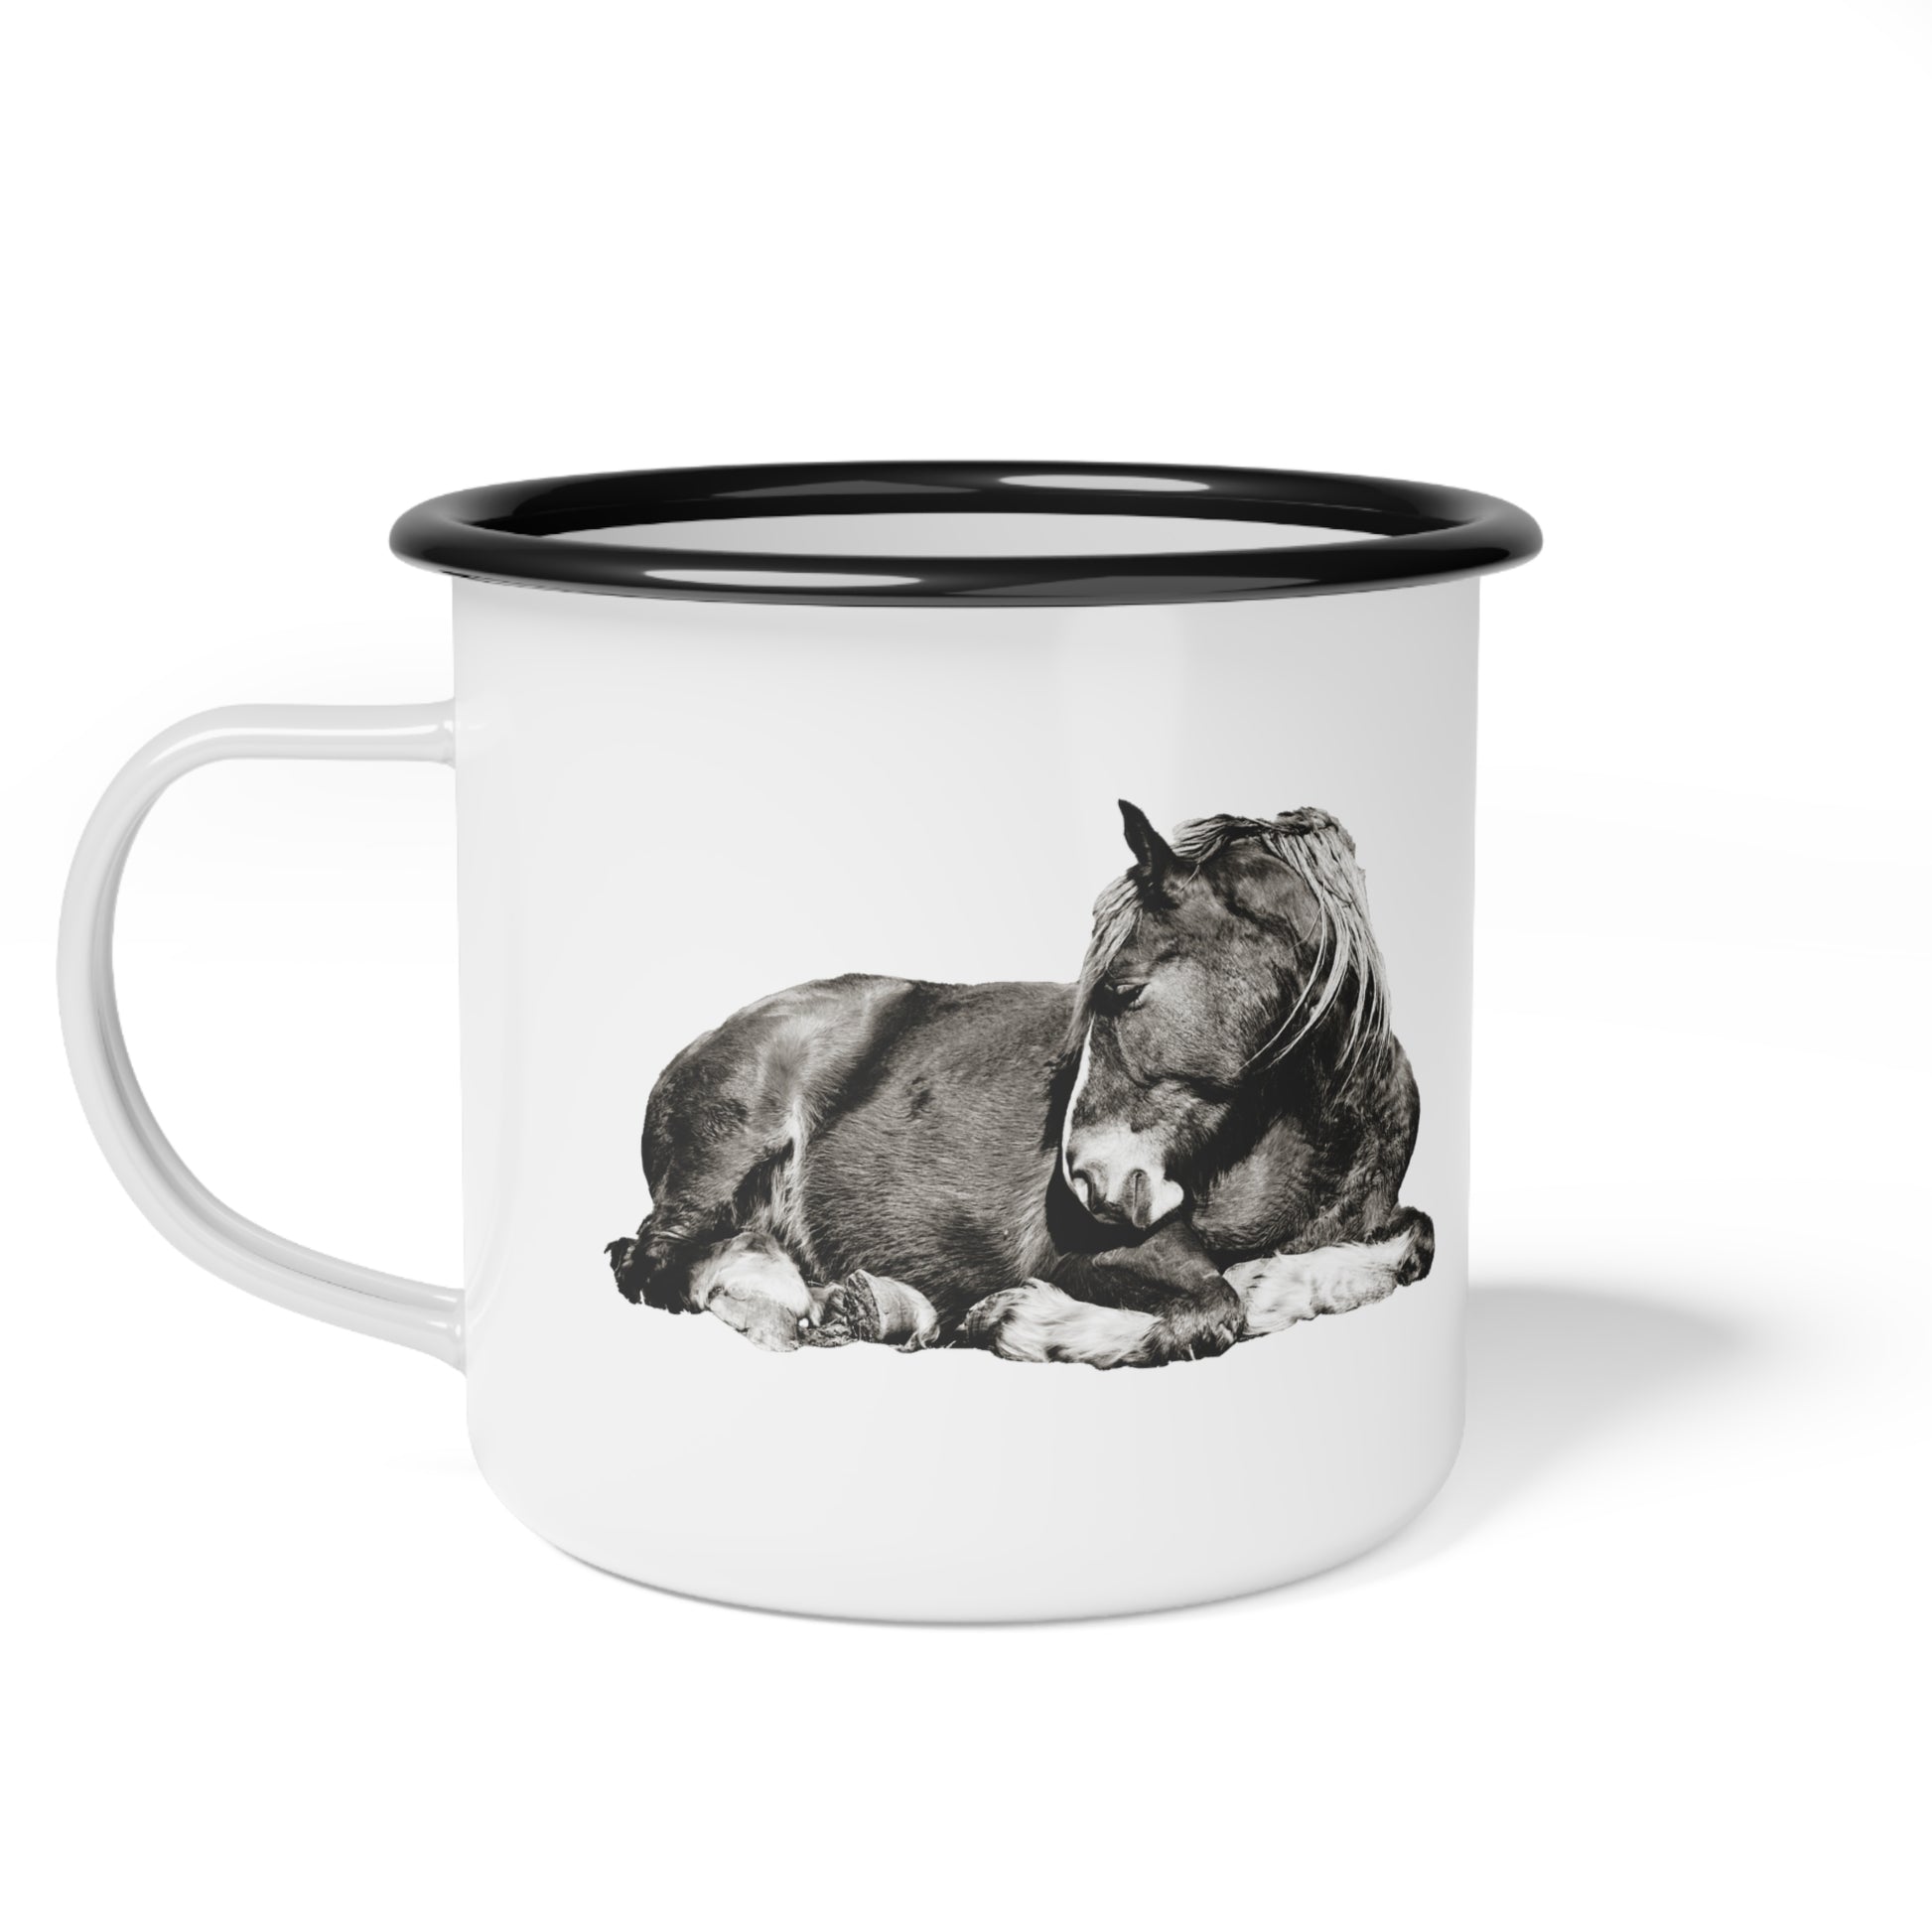 White Horse Terracotta Mug – White Horse Coffee Roasters